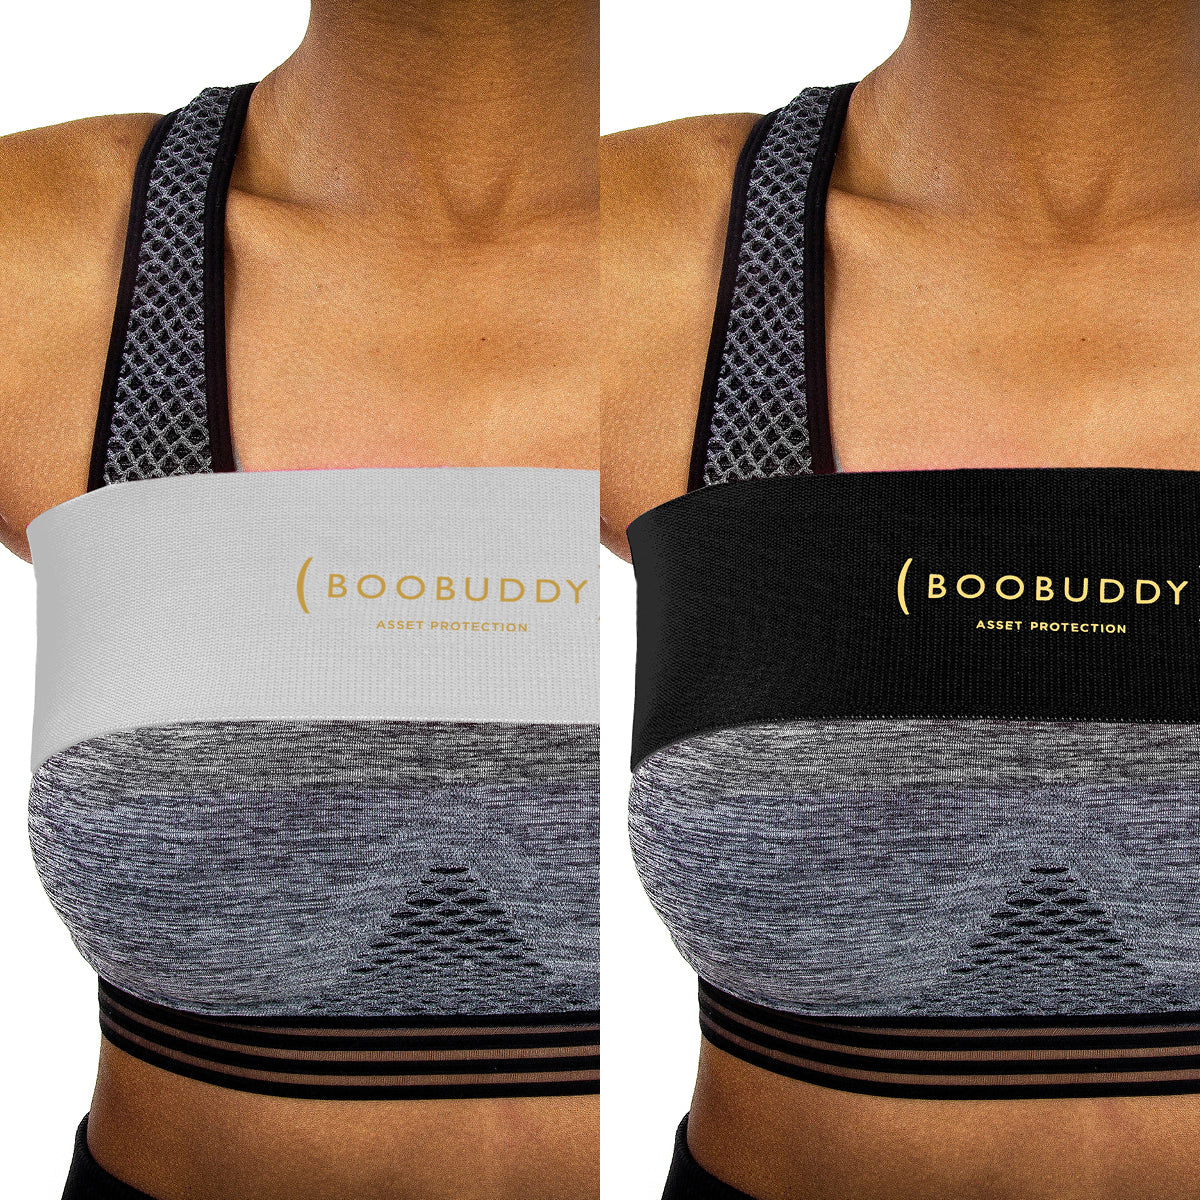 Boobuddy Adjustable Breast Support Band | Grey & Black Bundle | How to Wear a Boobuddy